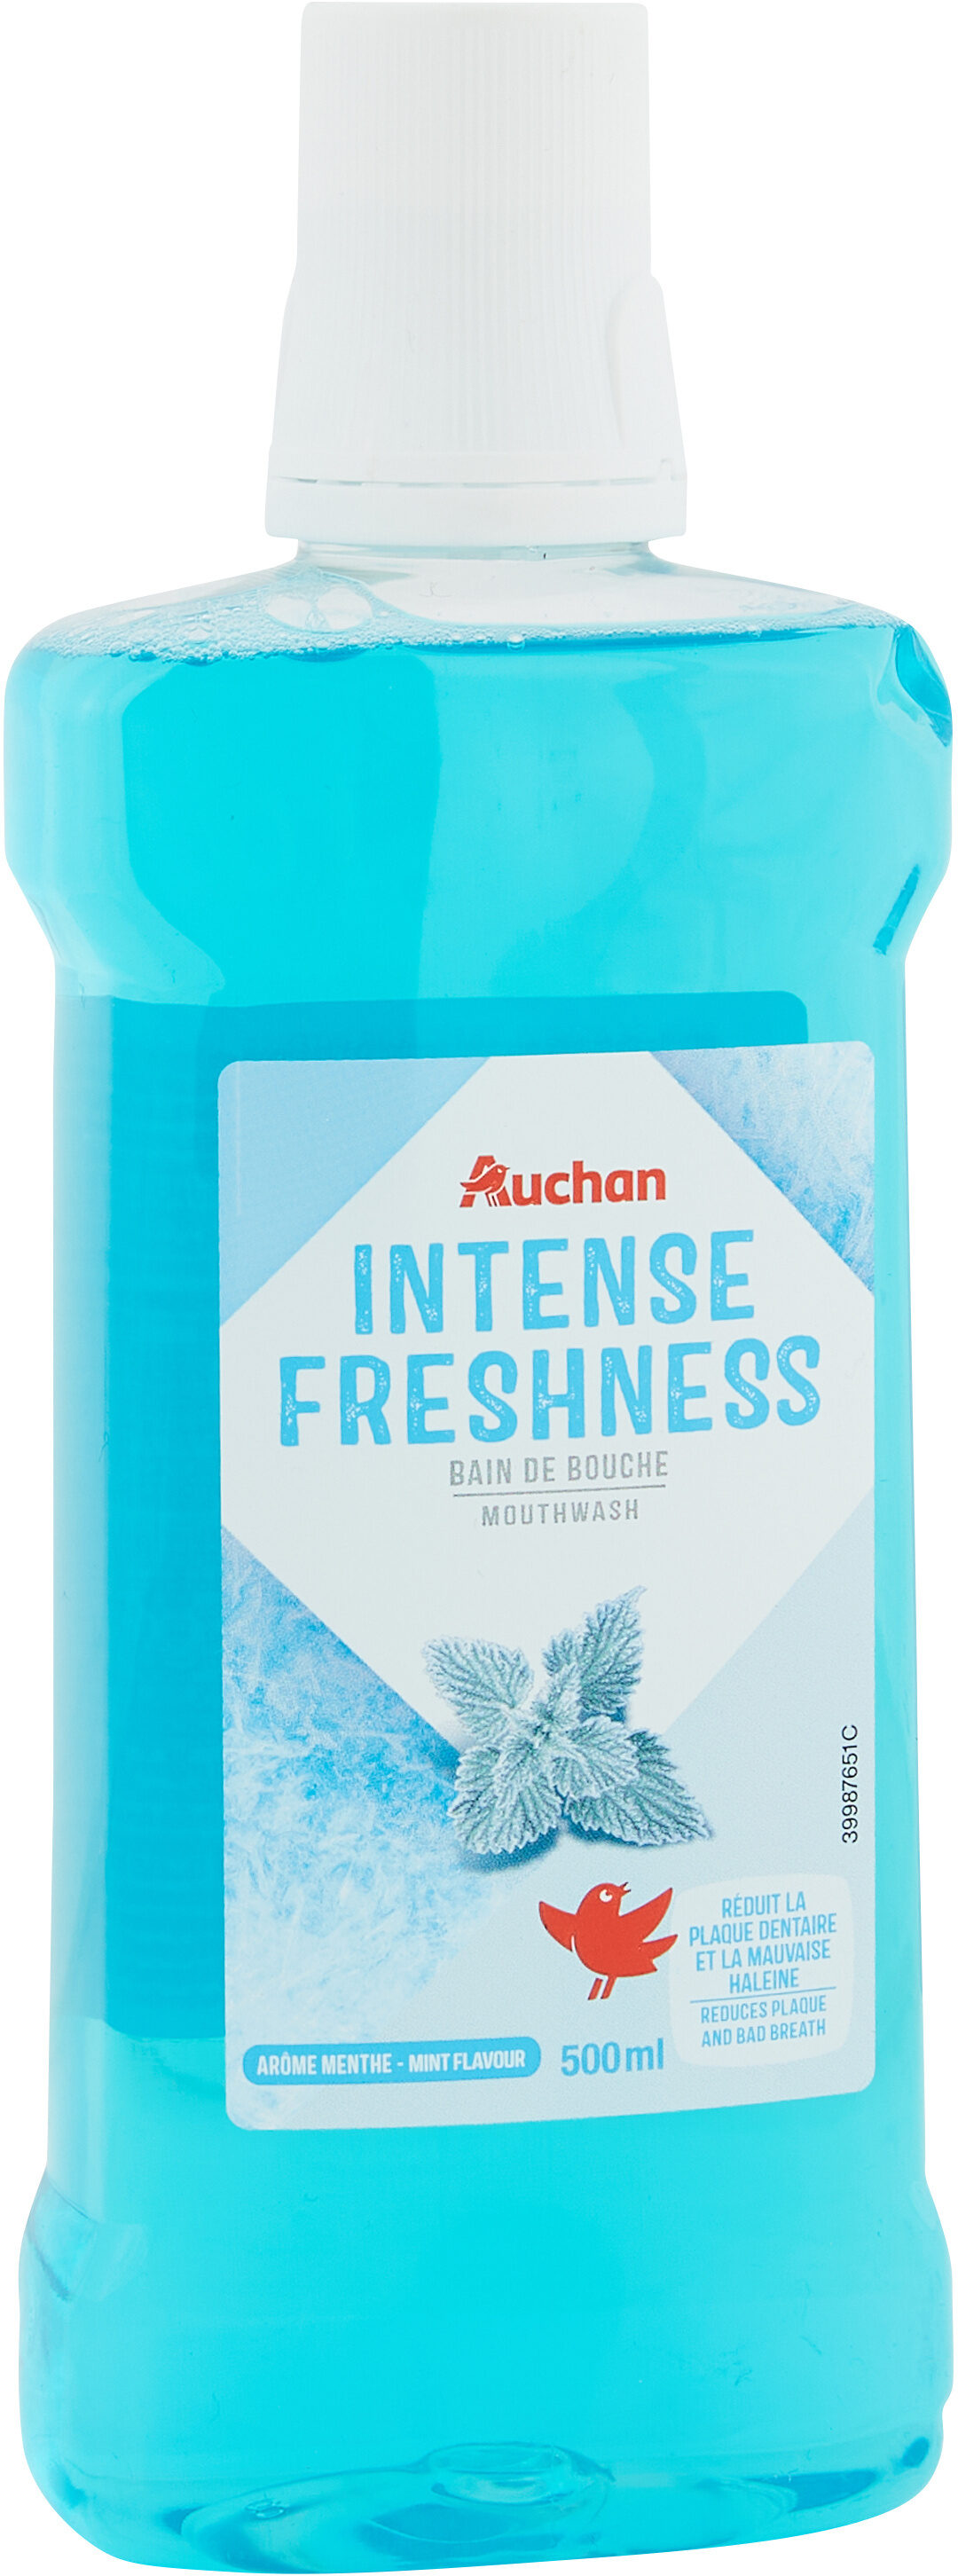 Auchan - bain de bouche - fraicheur intense - 500ml - Produto - fr